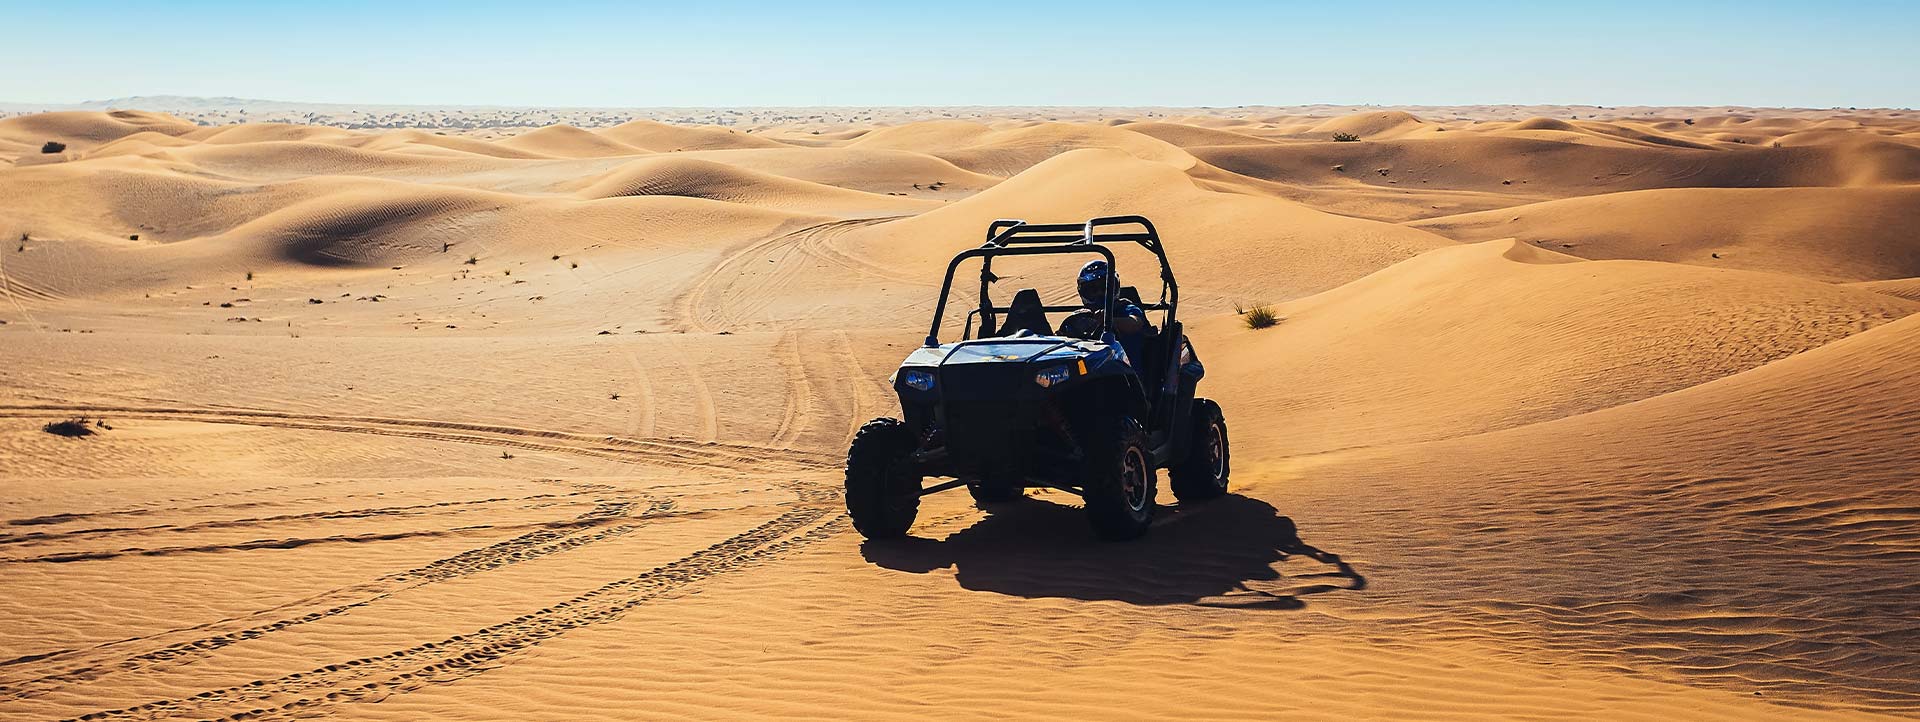 Evening Desert Safari with Dune Buggy Ride